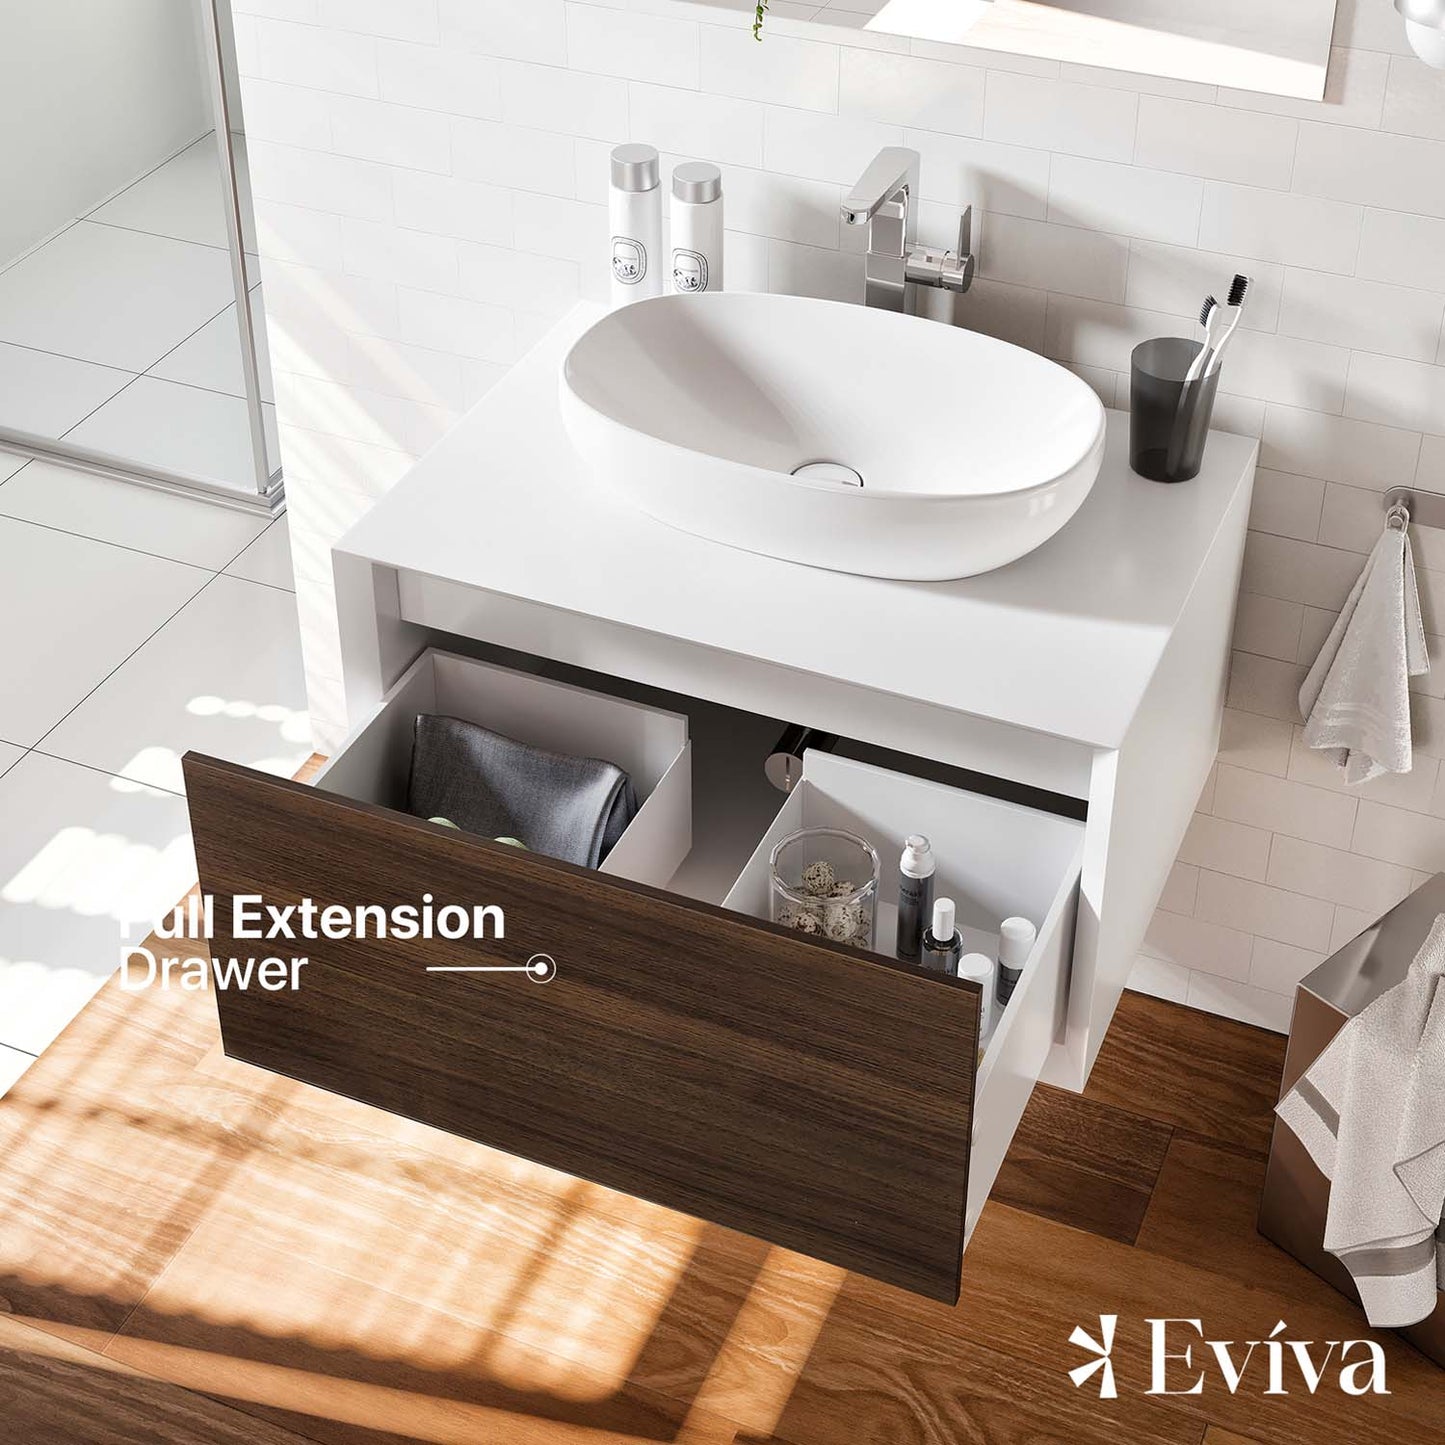 Eviva Santa Monica 30 in. Gray Oak Wall Mount Bathroom Vanity with White Acrylic Vessel Sink